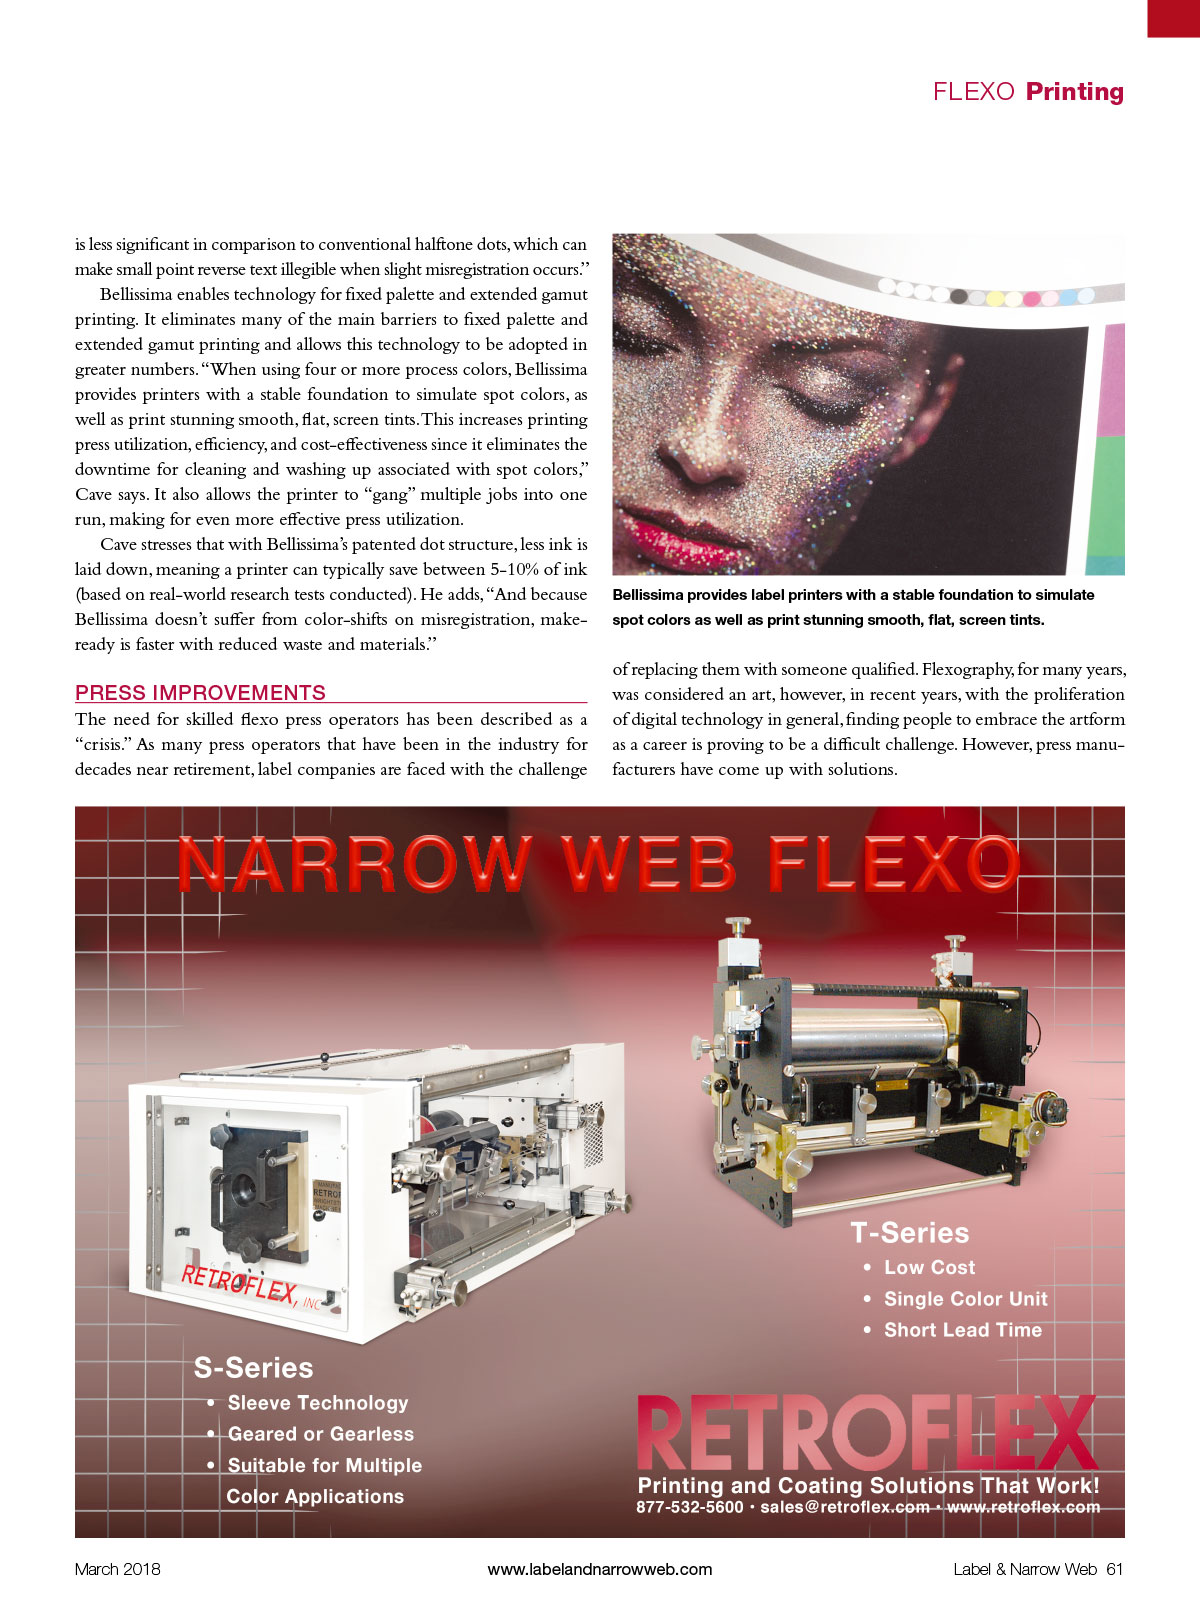 Flexo Innovation - Label Narrow Web - Best Full Ultra HD Flexographic Screening